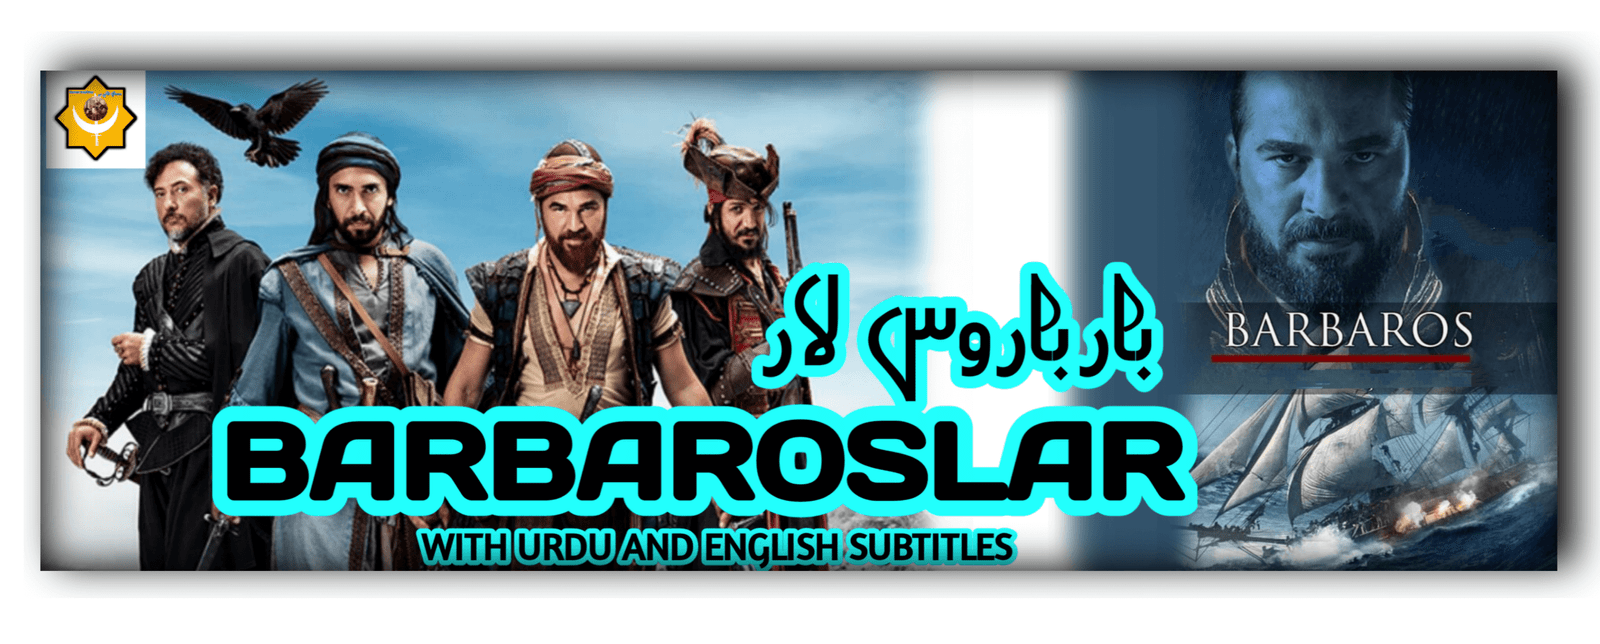 https://osmankayibey.com/watch-barbaroslar-with-urdu-and-english-subtitles/